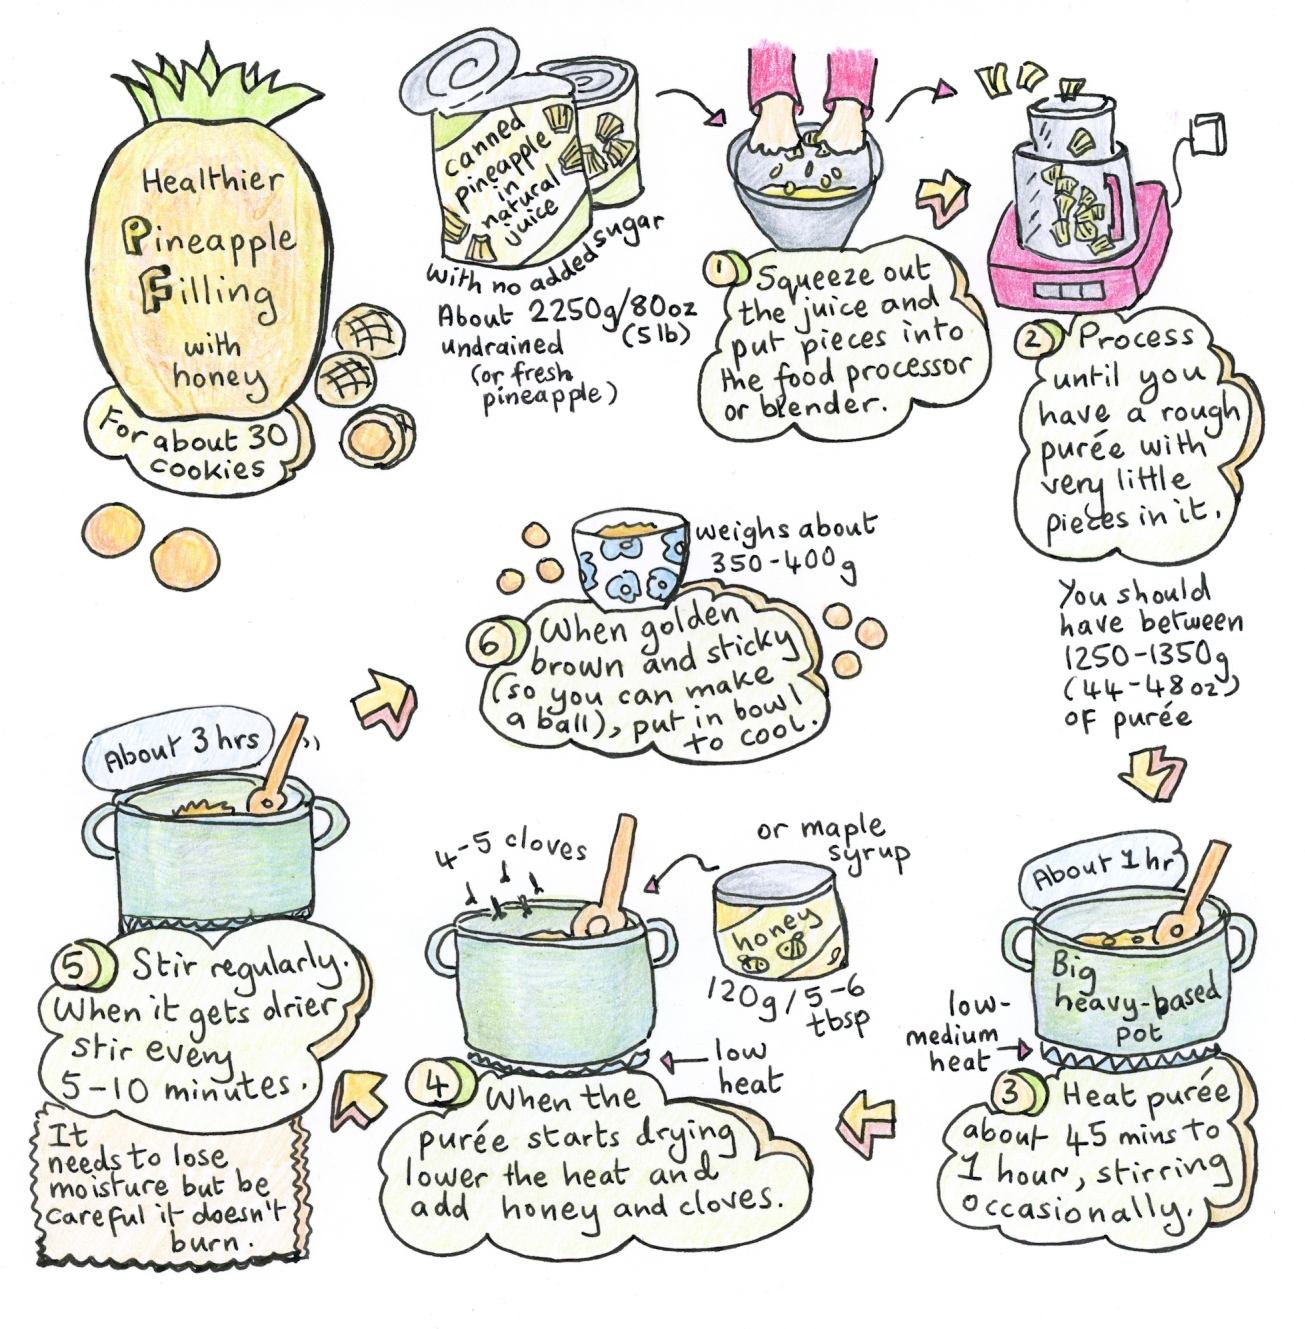 Pineapple tart jam illustrated recipe